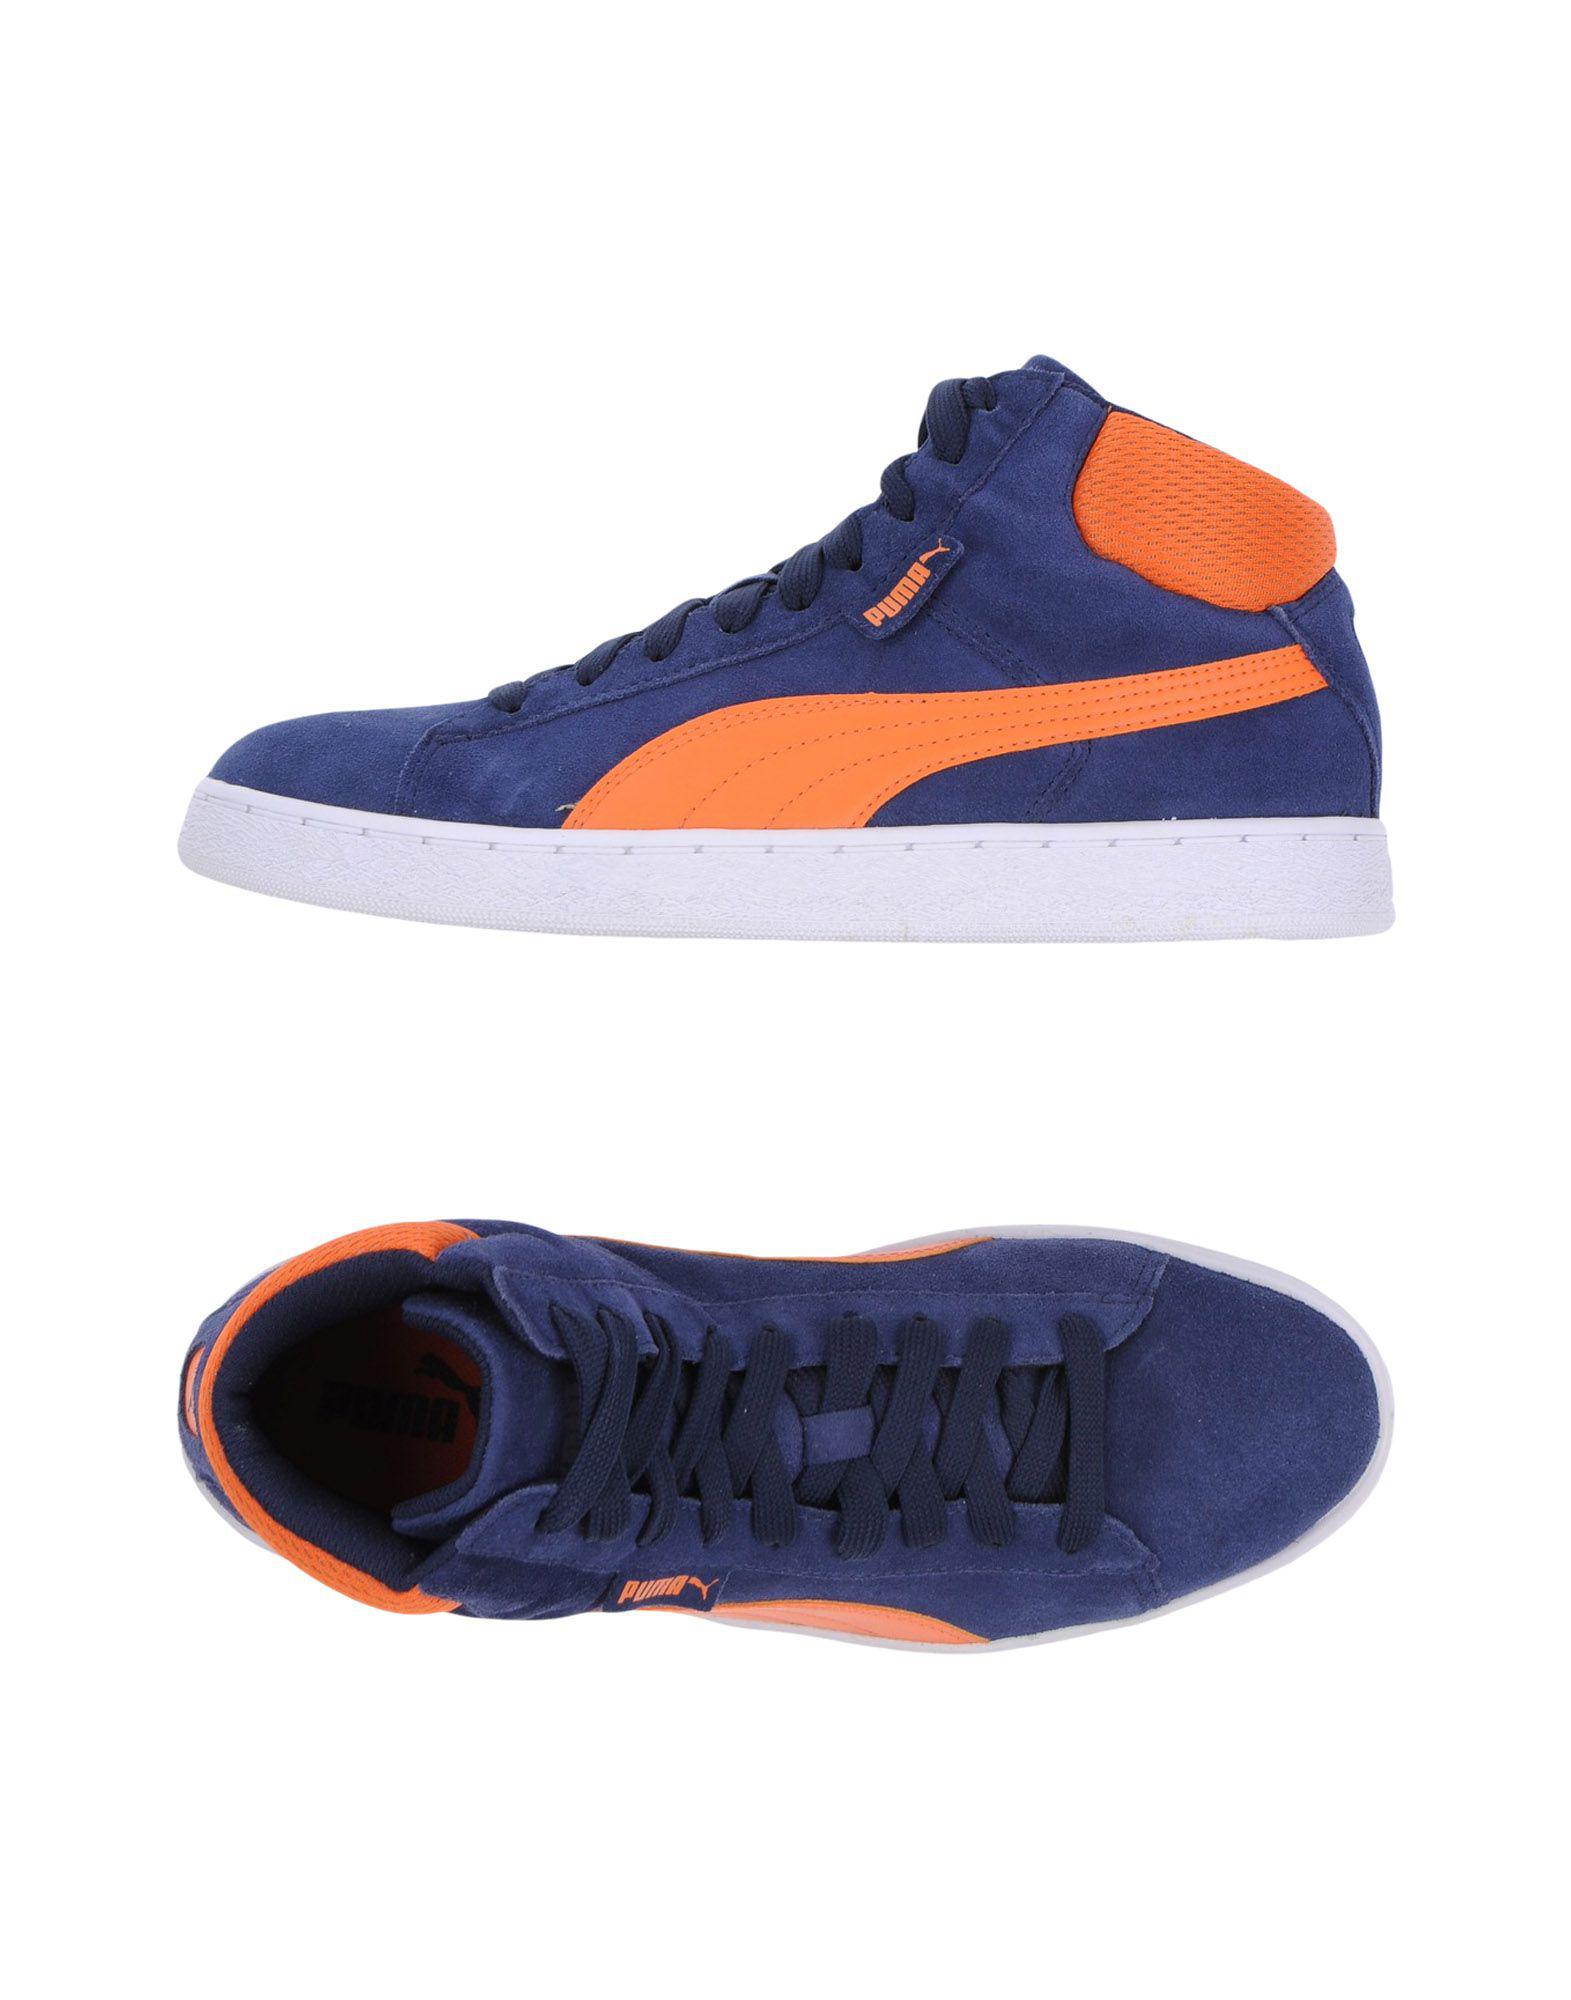 puma dark blue sneakers